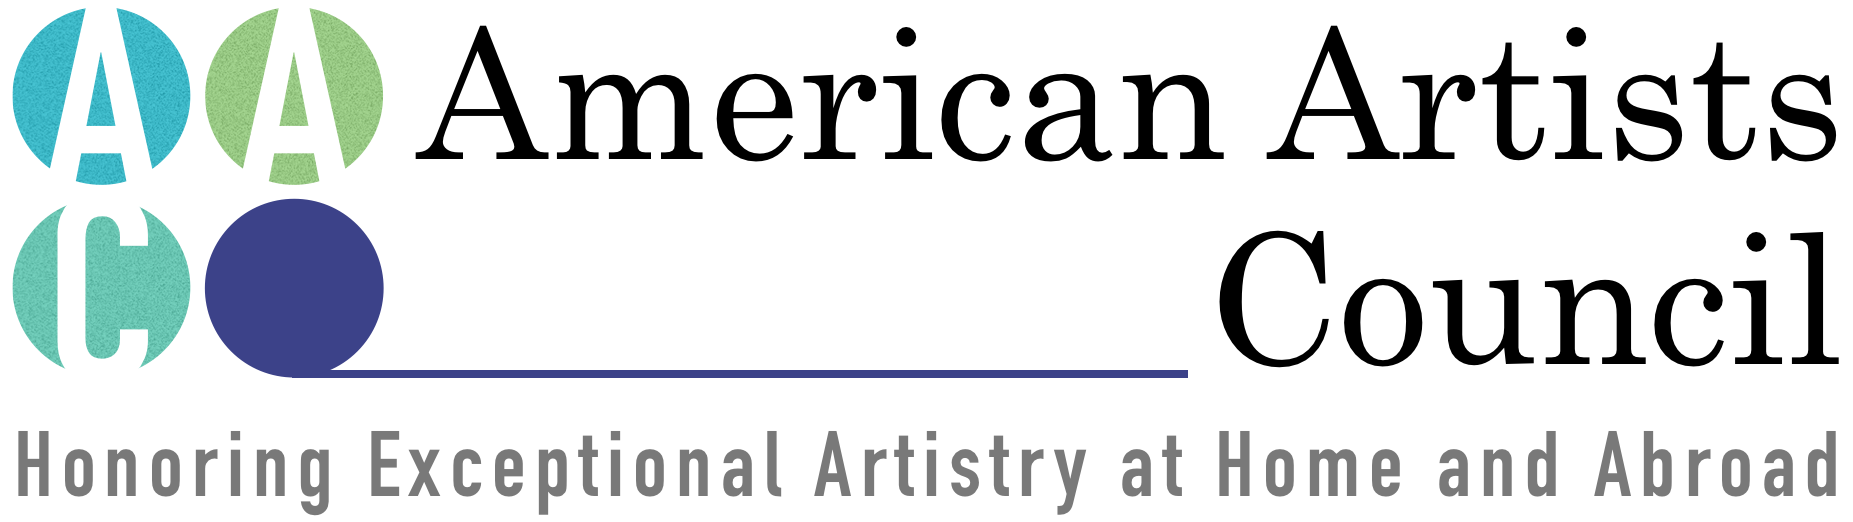 American Artists Council LLC